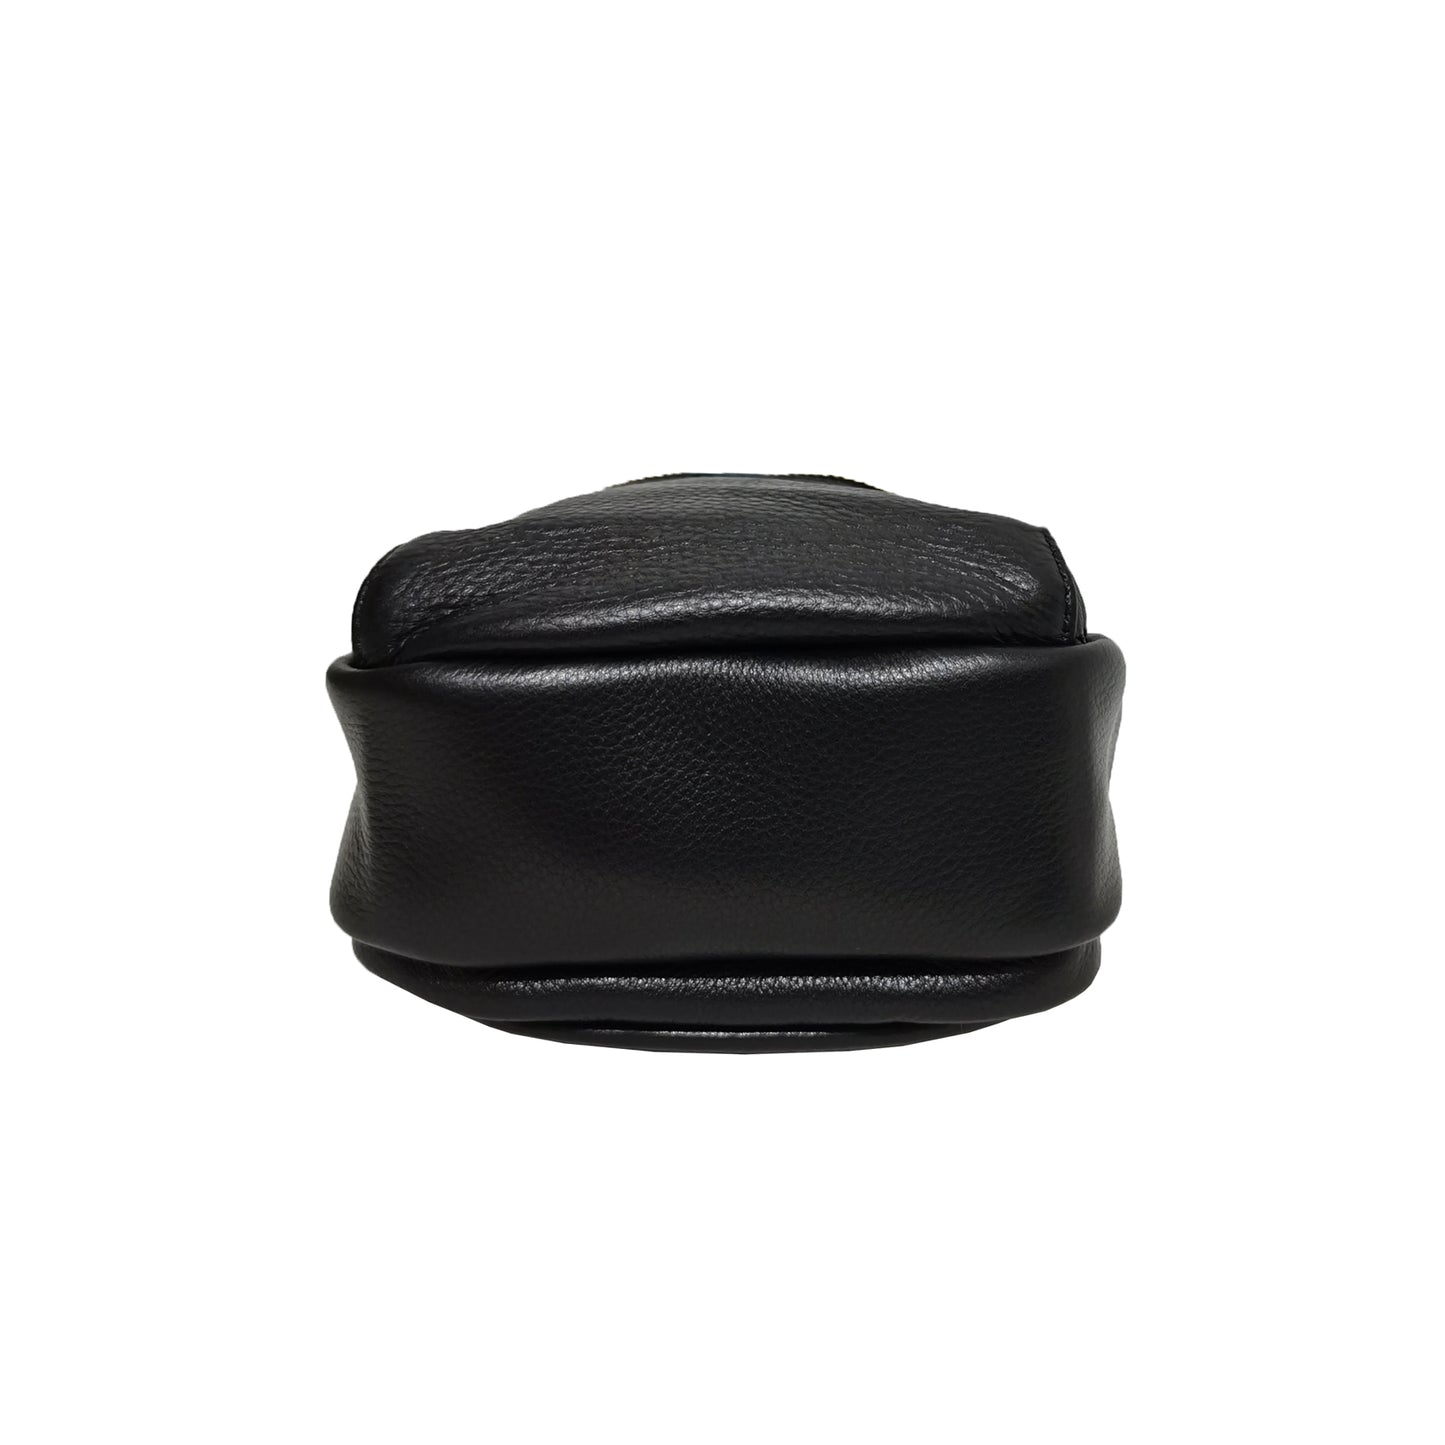 Women's genuine cowhide leather handbag Bacco V2 design